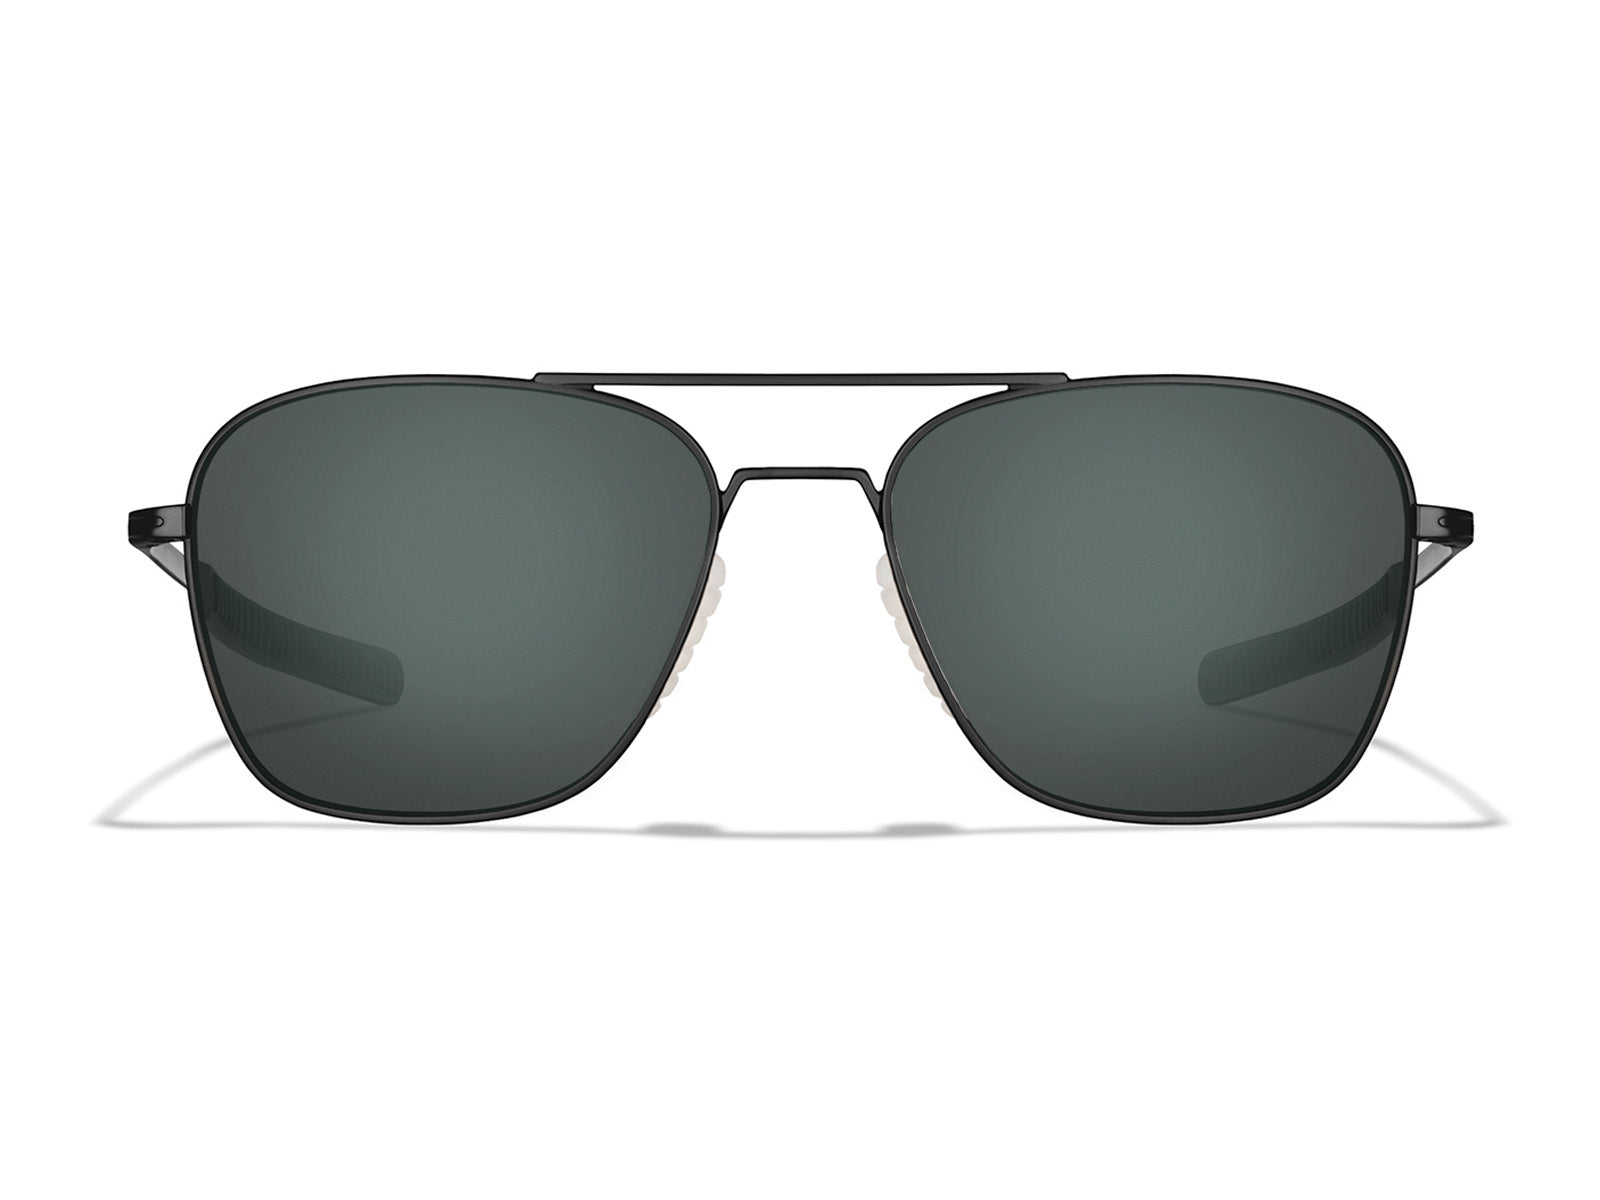 Roka Falcon Titanium Polarized Sunglasses Gunmetal/Ranger, Reg 55